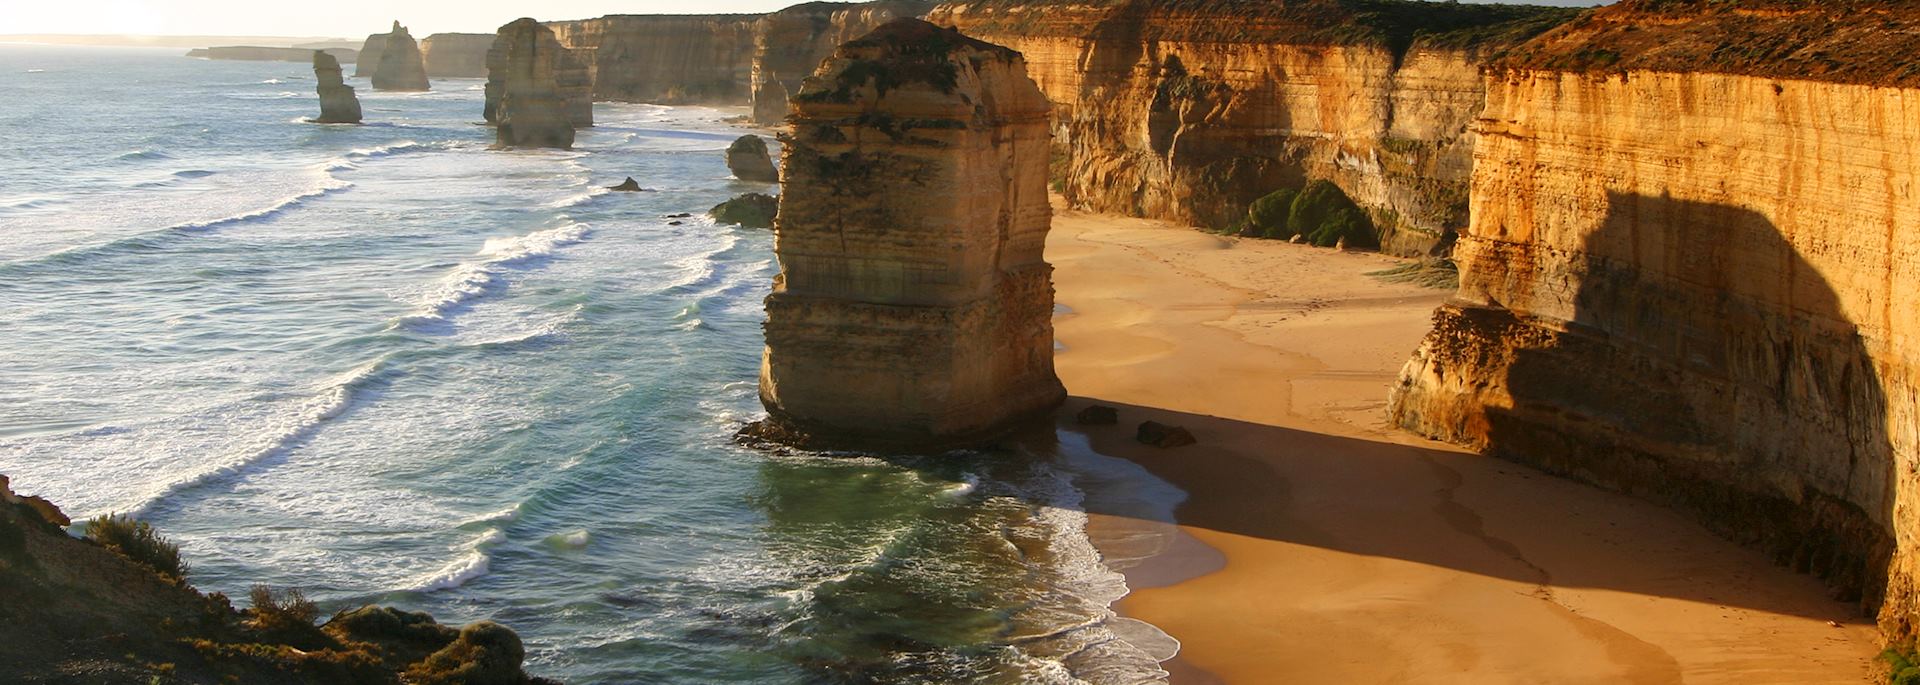 Twelve Apostles on the Great Ocean Road, Australia